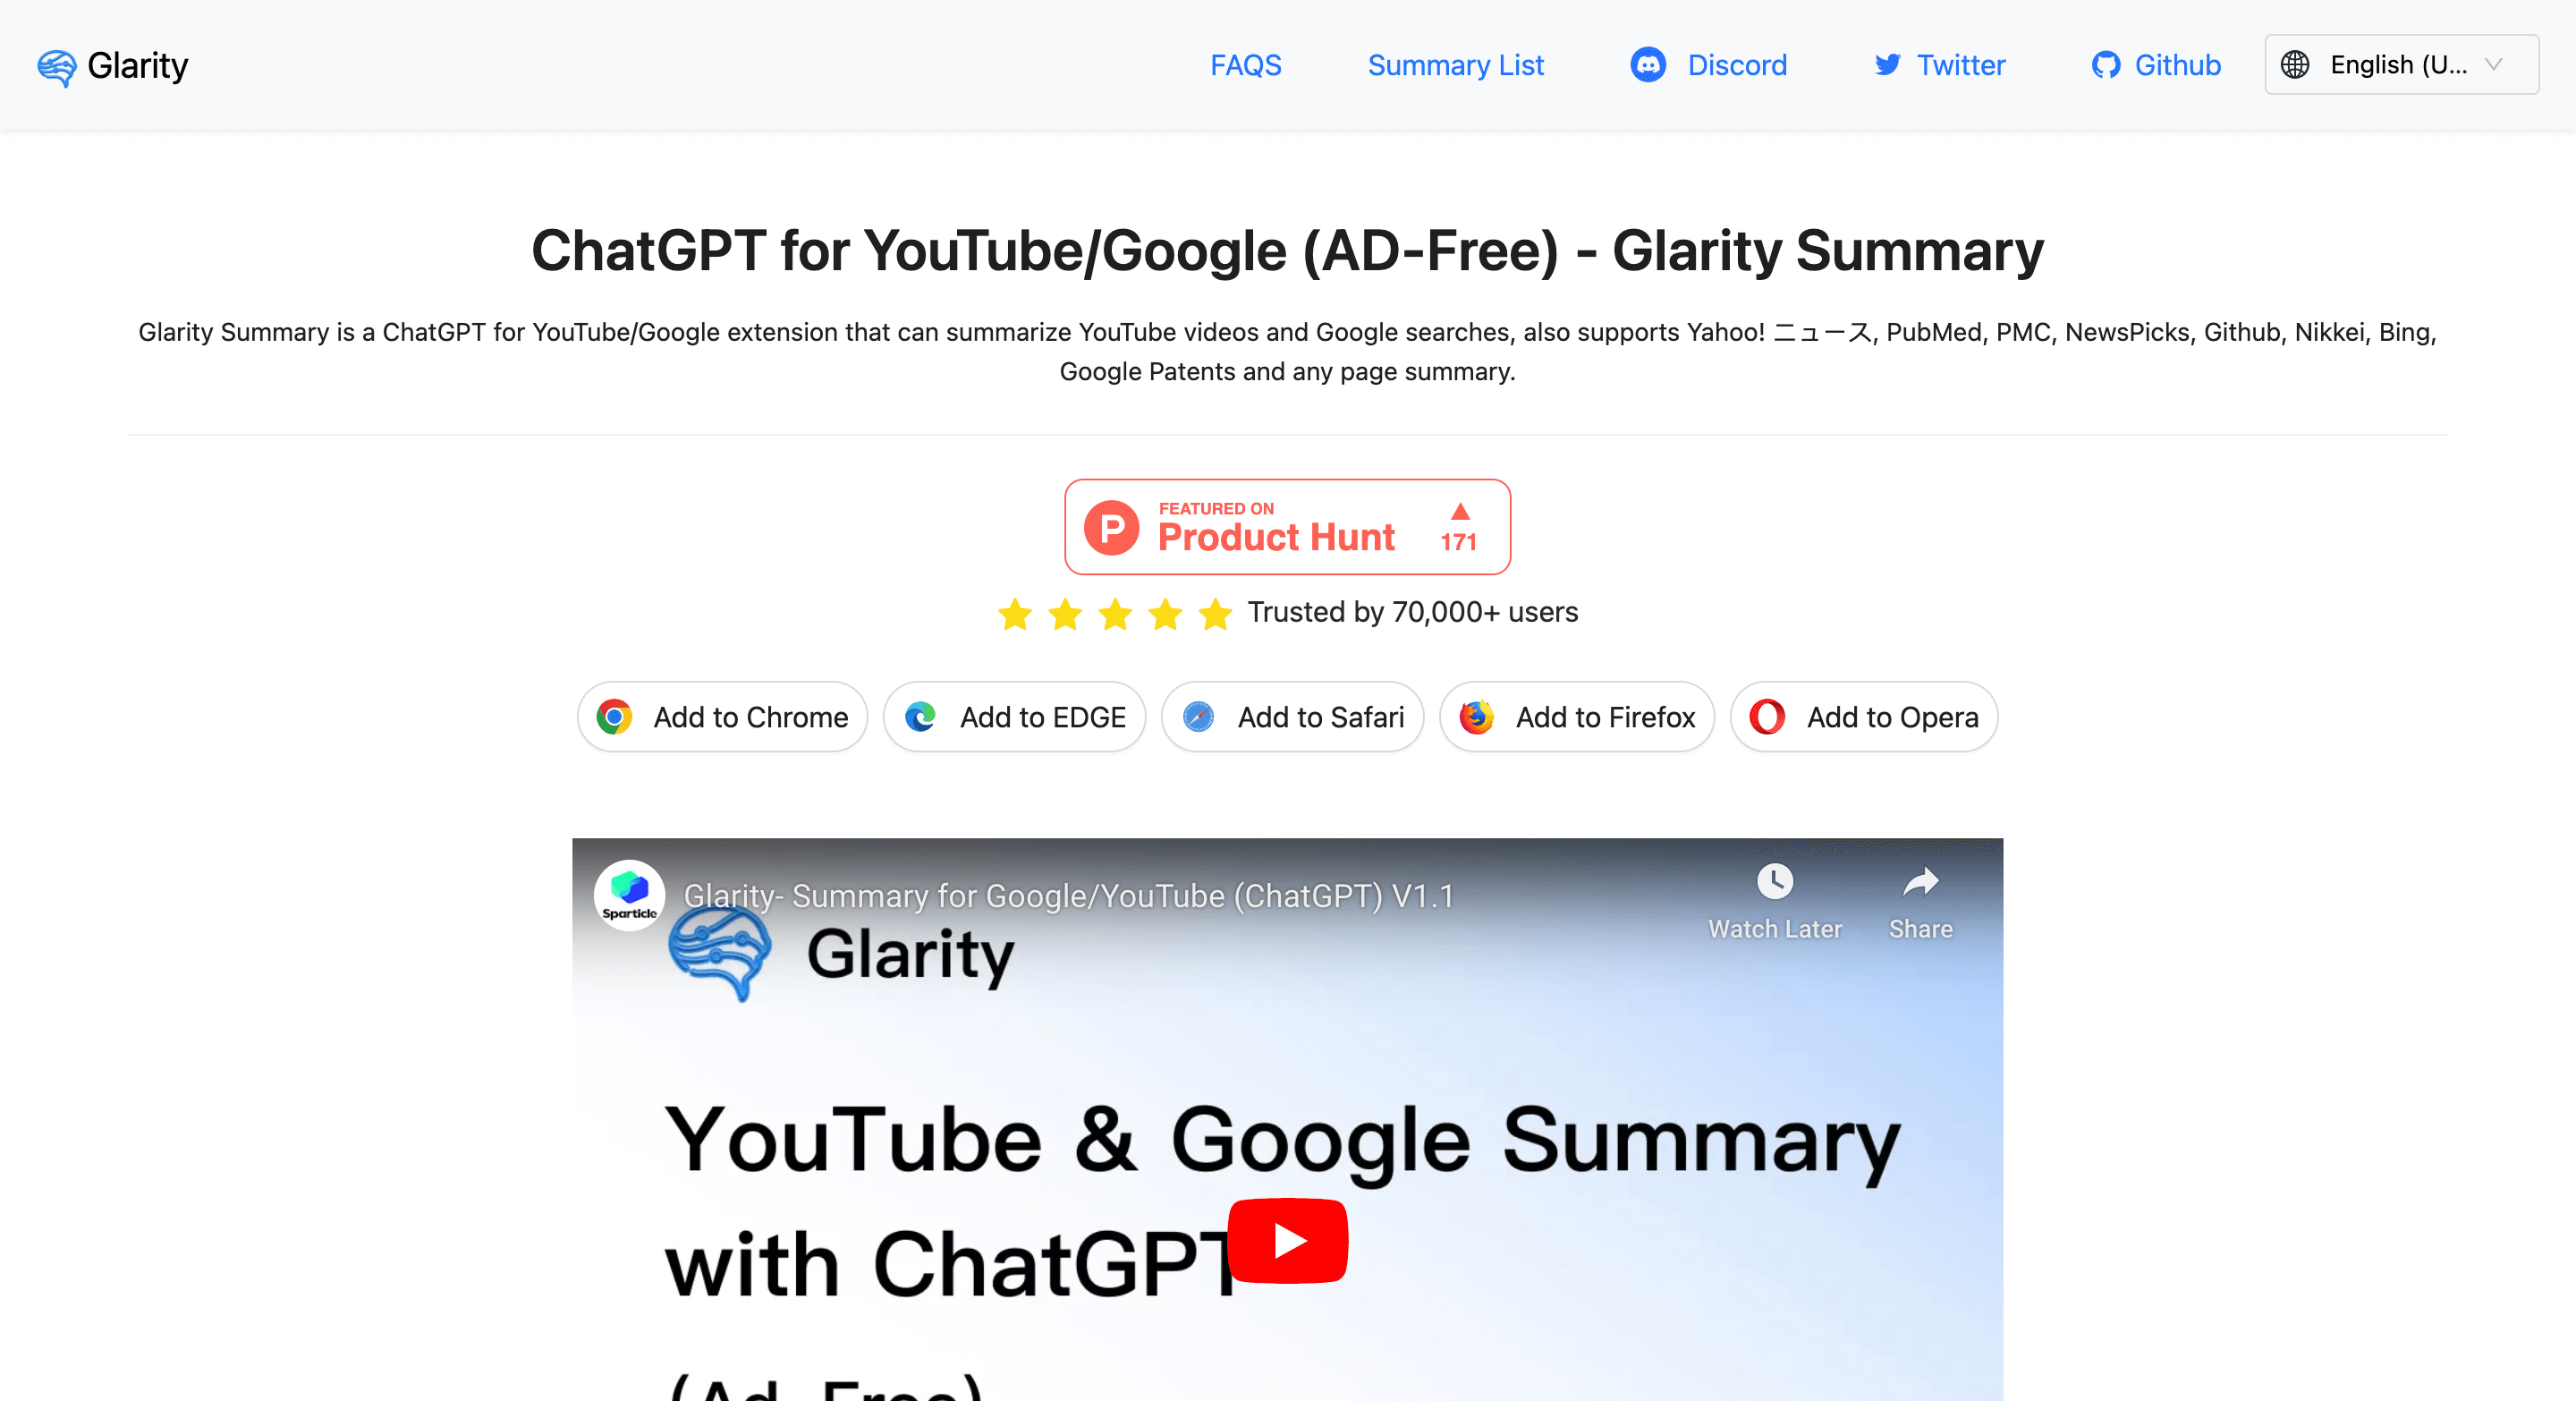 Clarity Summary for YouTube